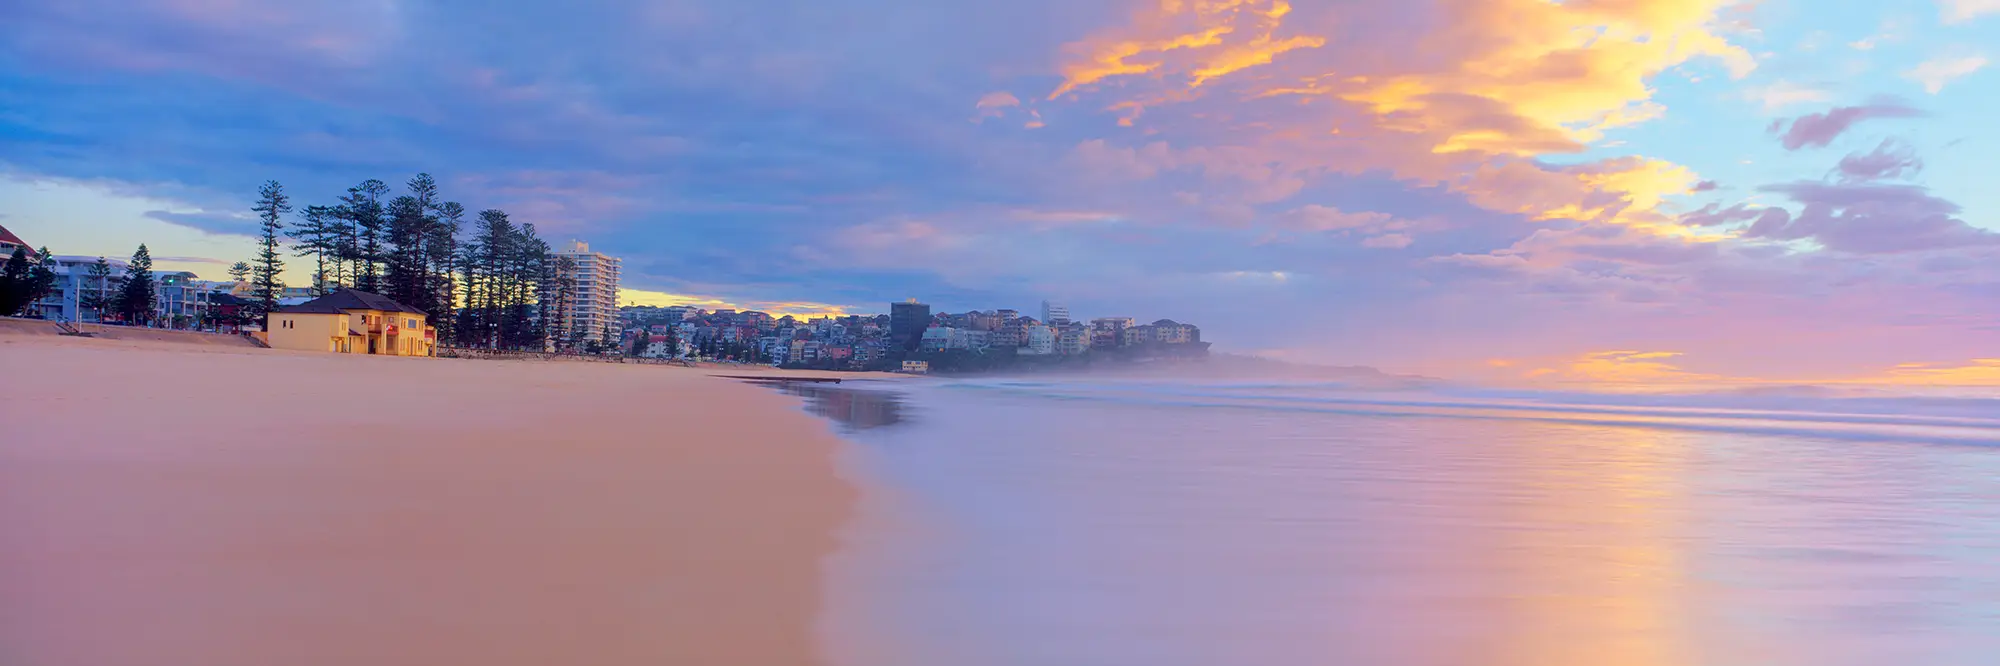 Manly Beach Sunrise Panoramic Photo - Fine Art Images